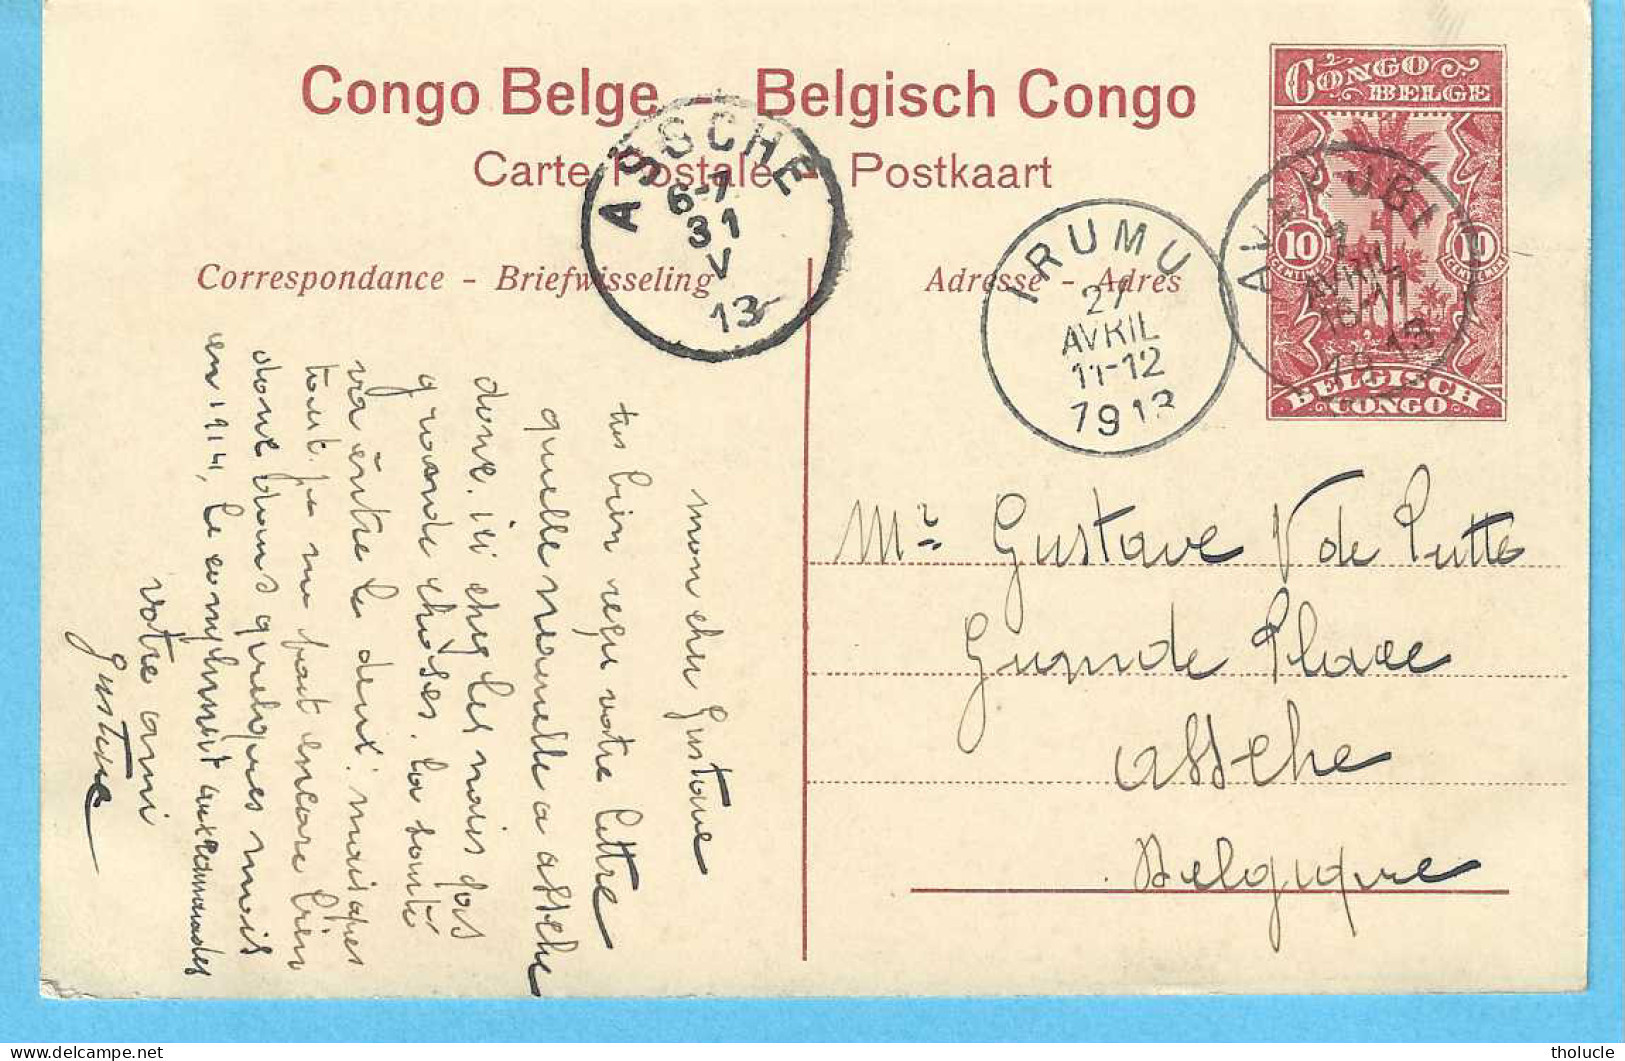 Belgisch Congo Belge-Entier Postal Illustré 10c-1913-Léopoldville-Les Bassins-De Dokken-Cachet-IRUMU-AVAKUBI-1913" - Ganzsachen